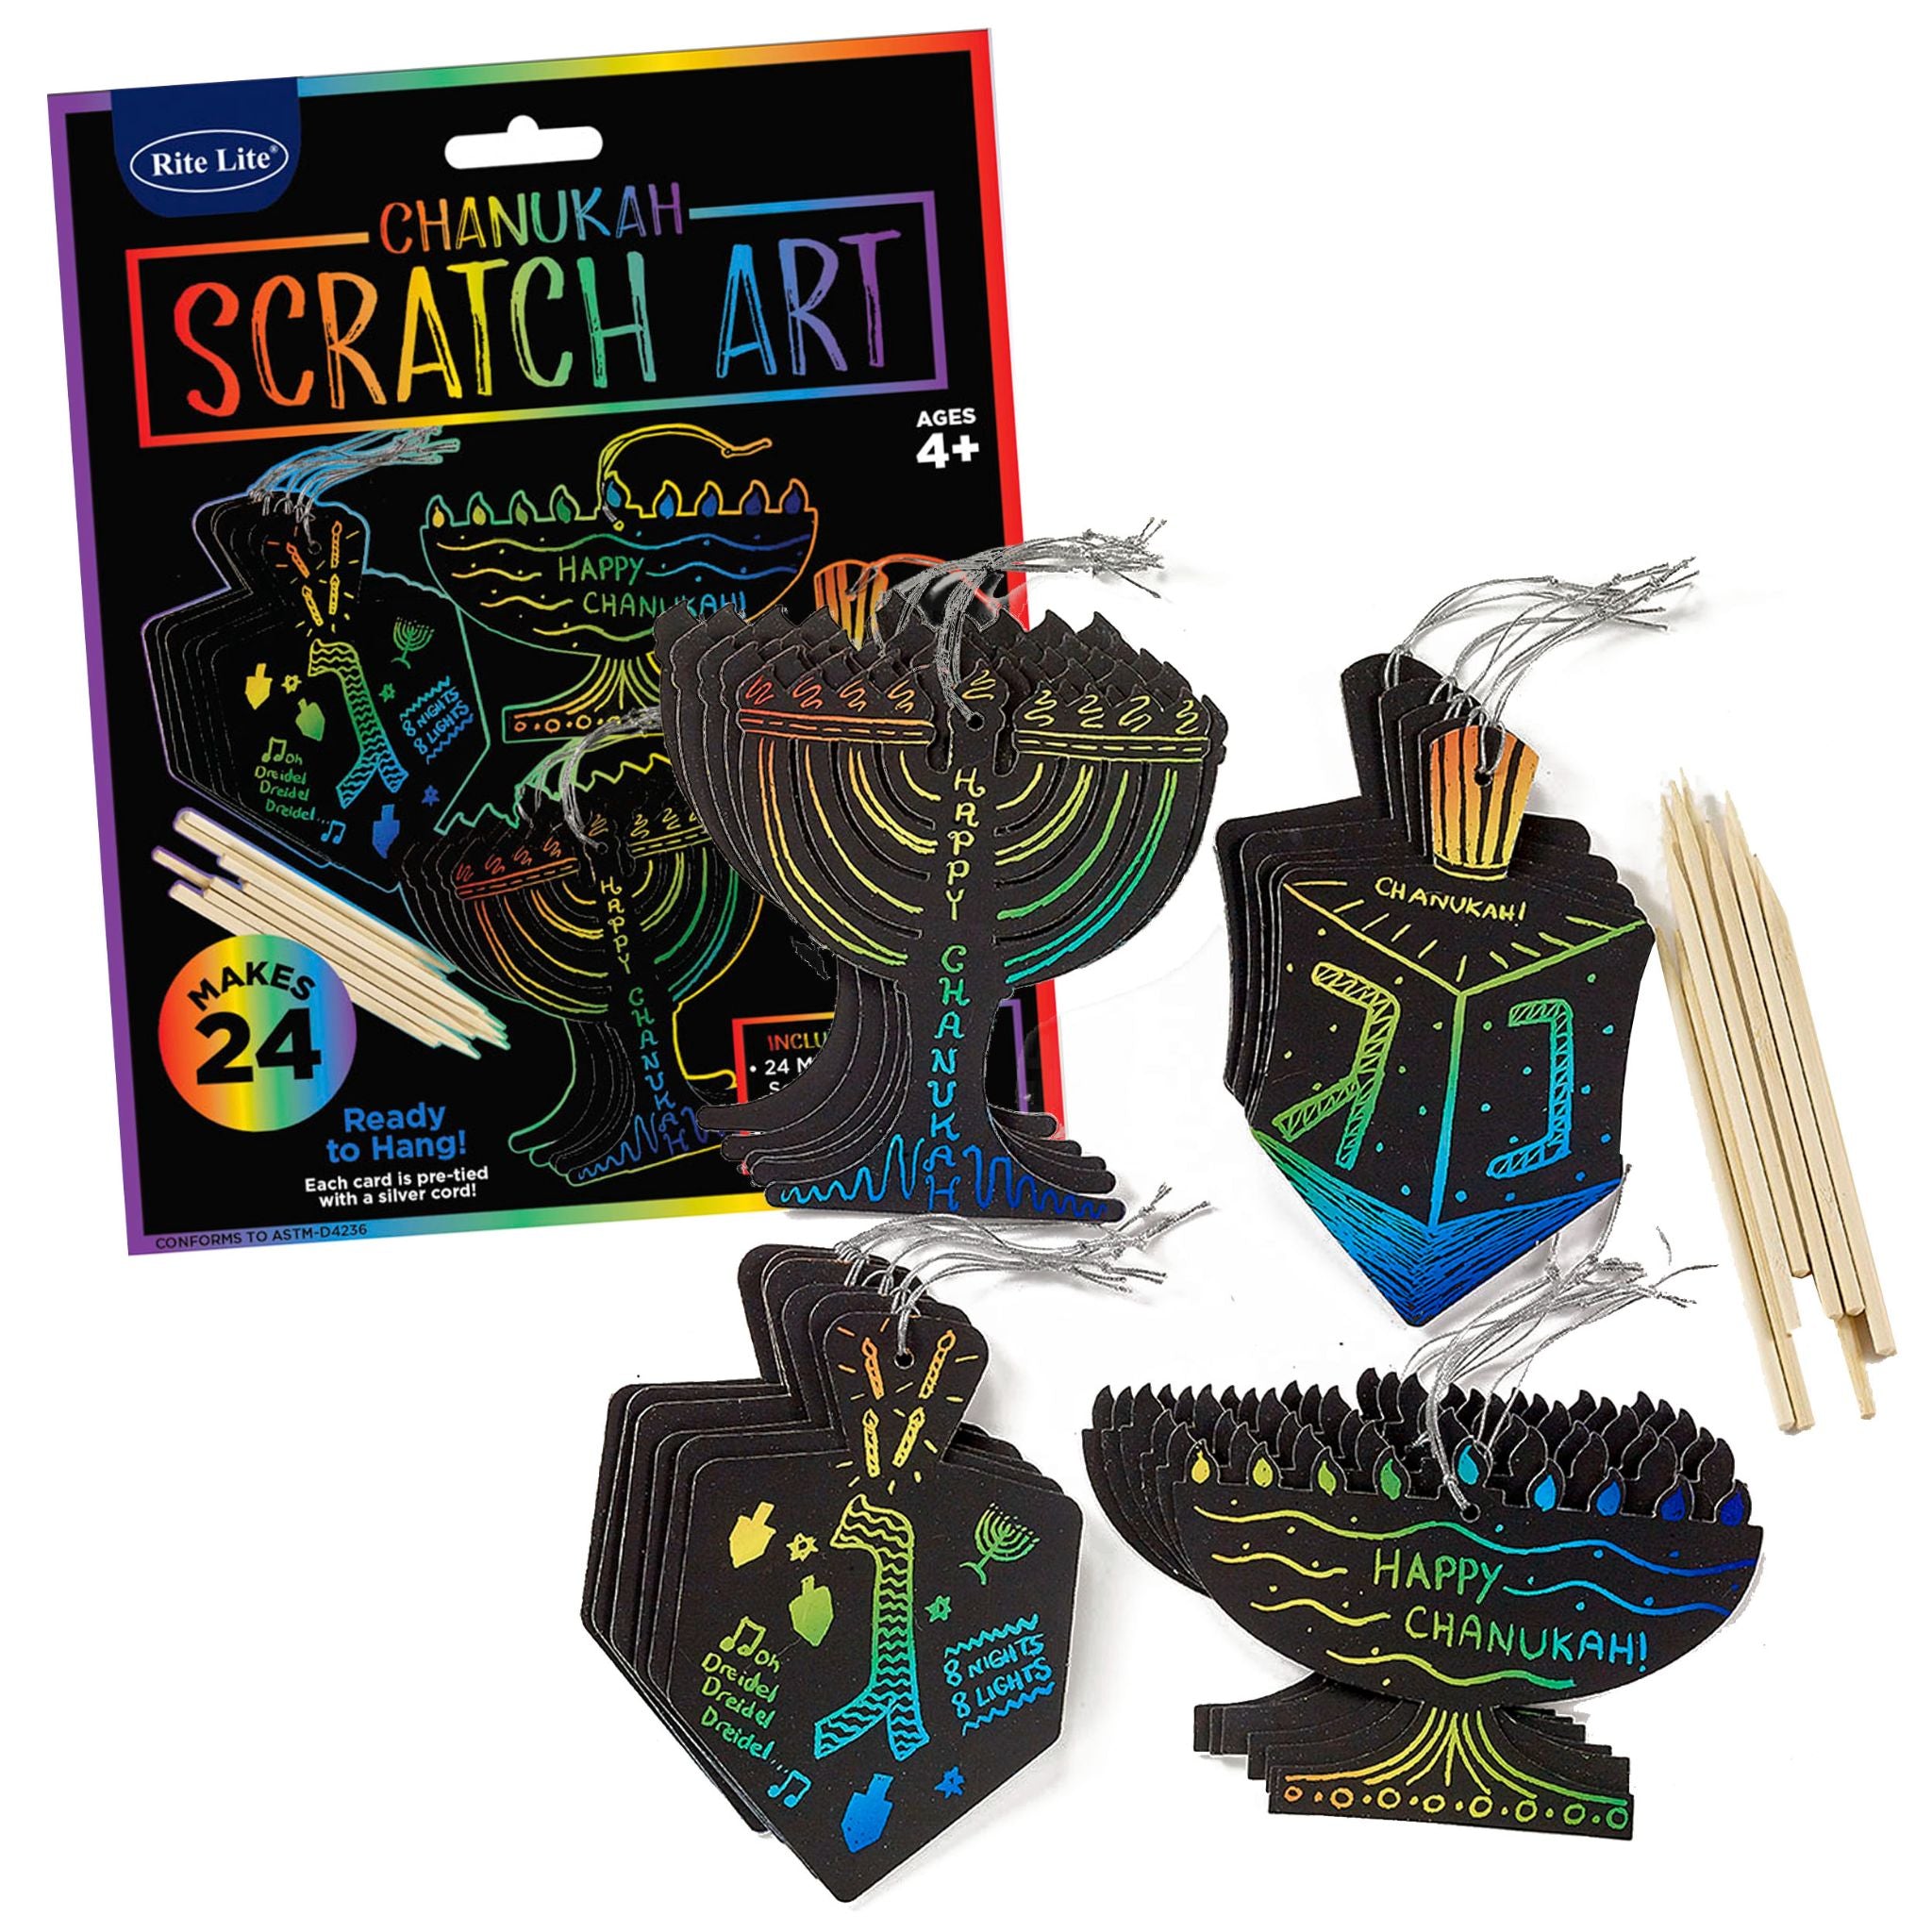 Chanukah Scratch Art – Contemporary Judaica